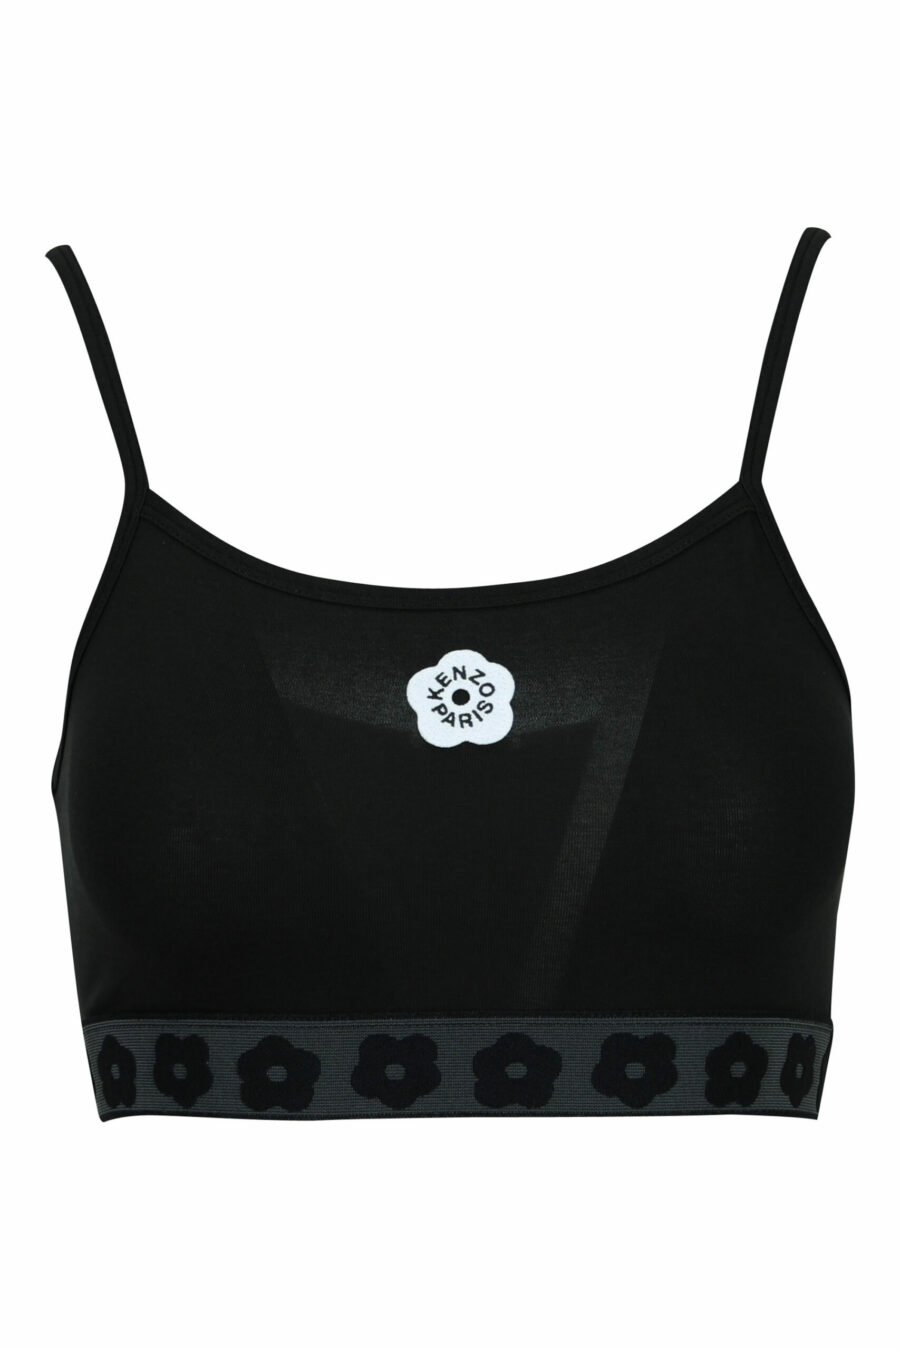 Top negro con logo "boke flower" negro - 3612230583405 scaled